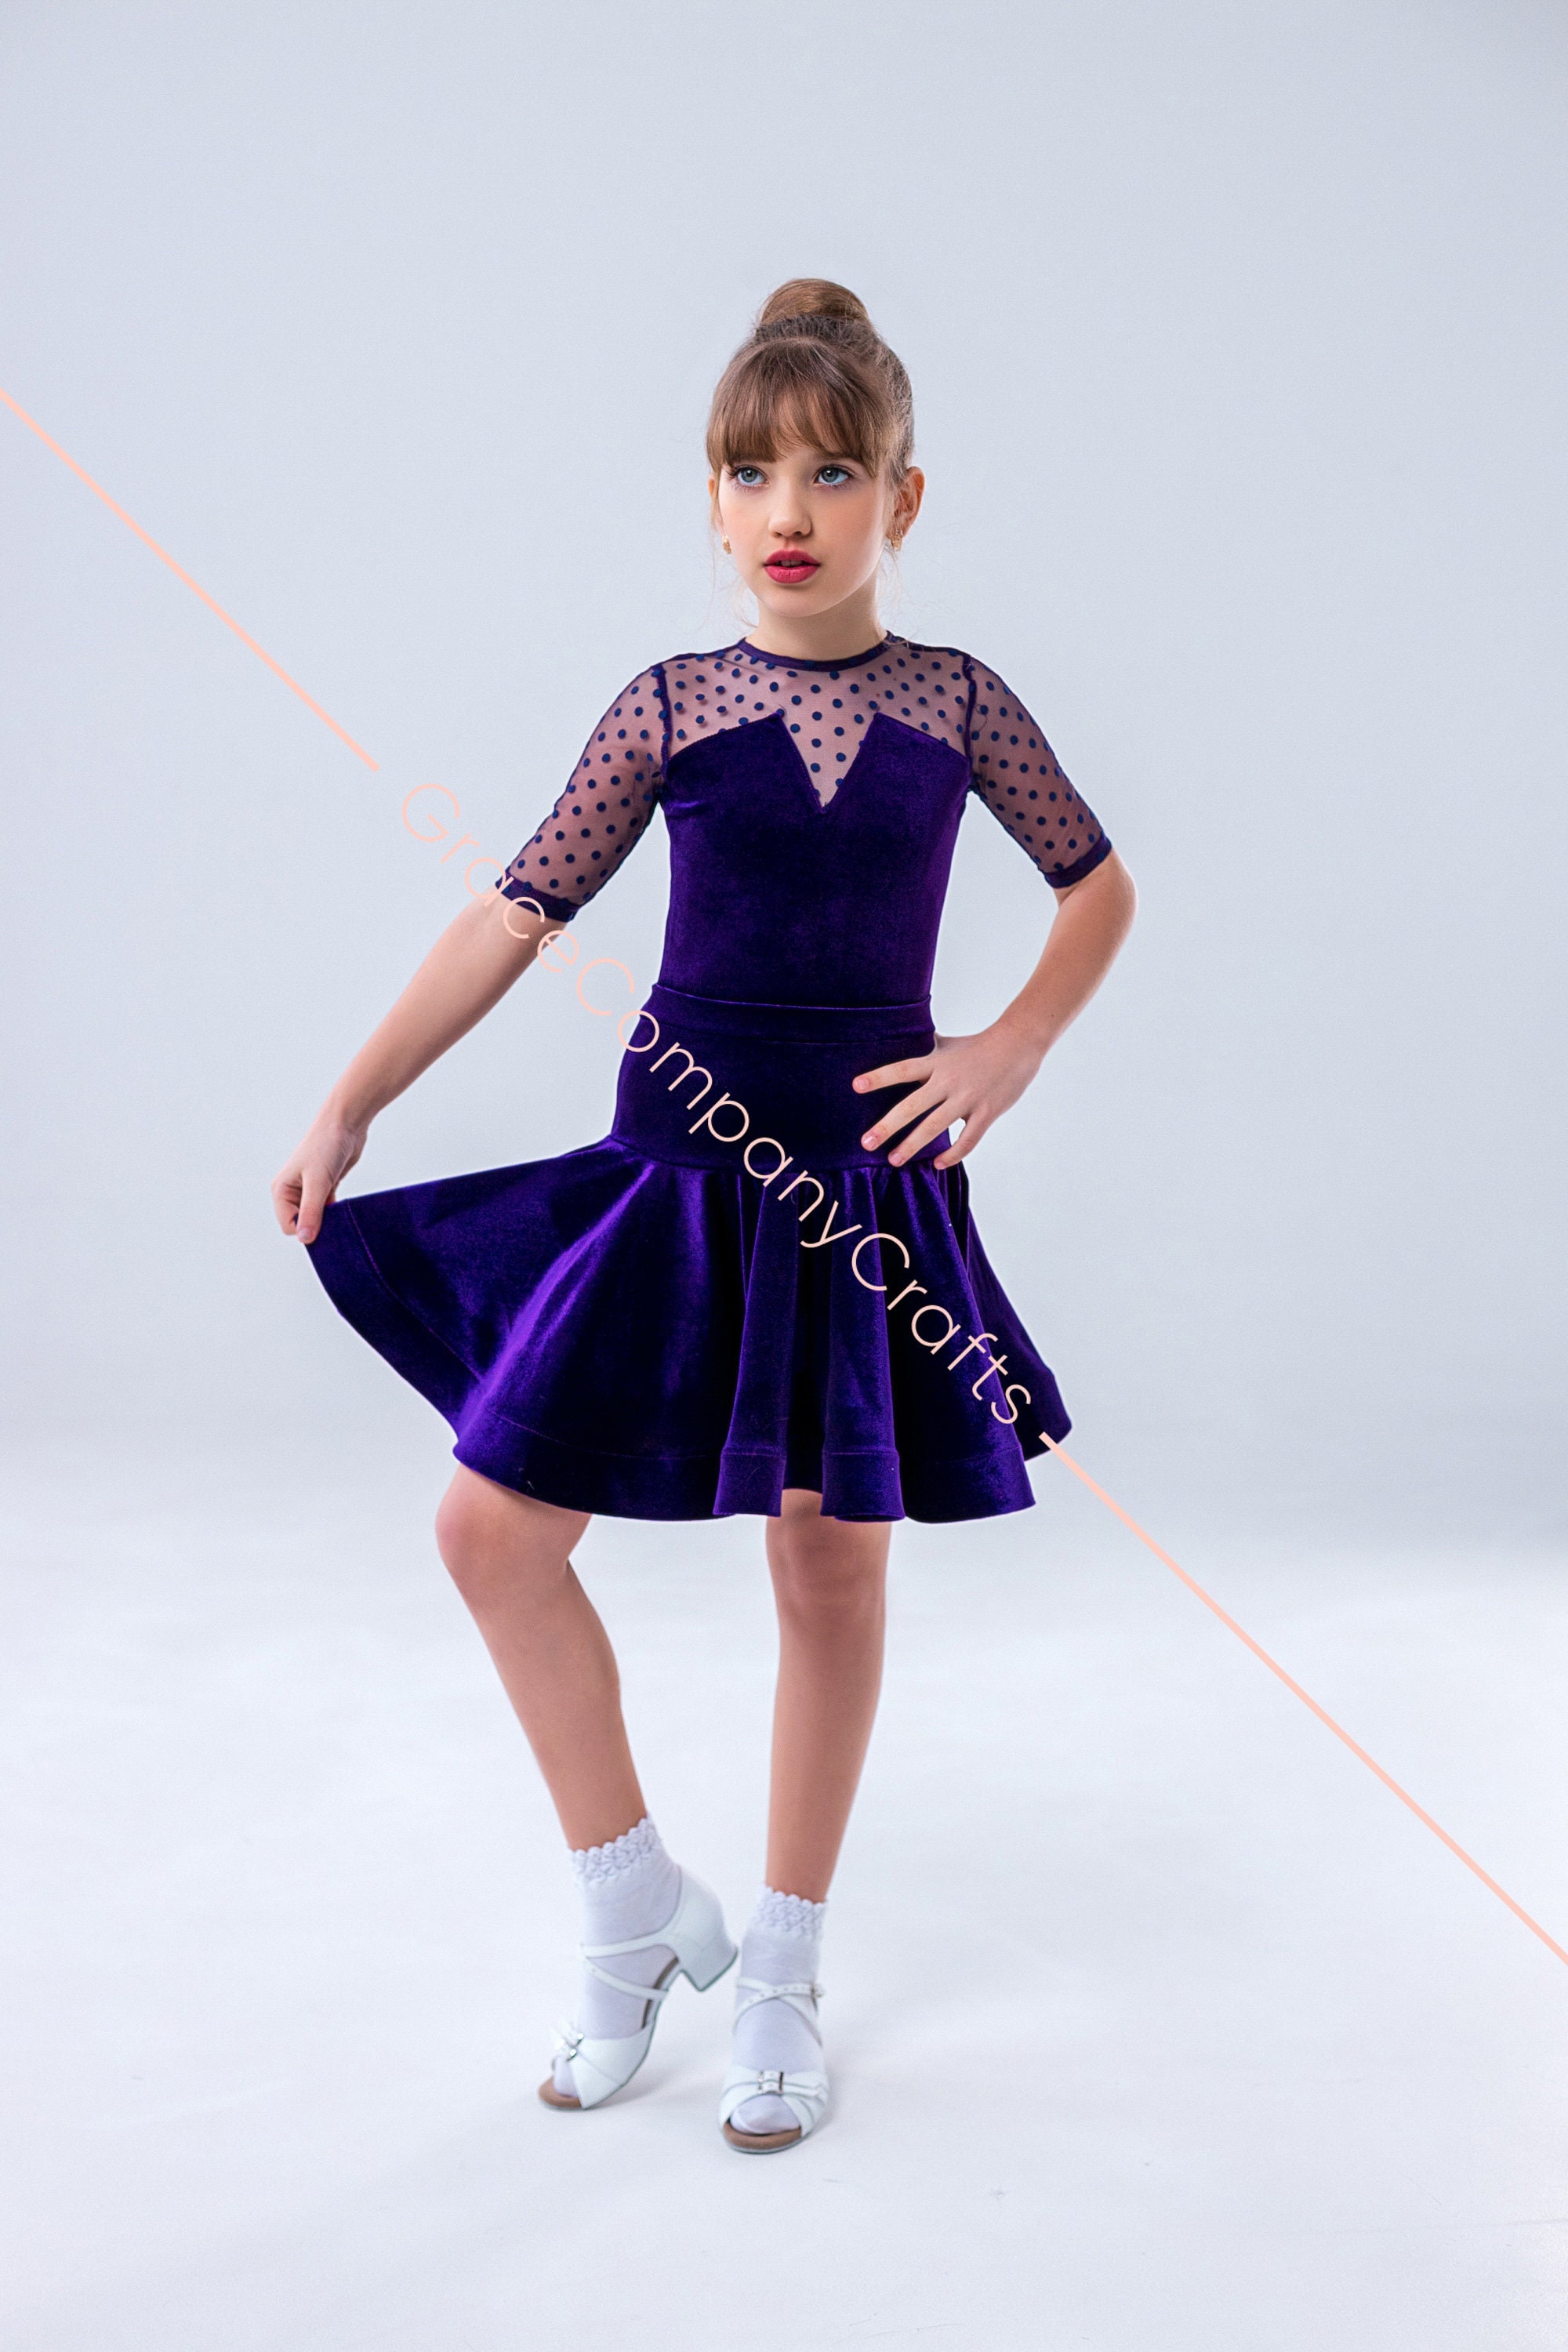 Children'S Latin Dance Clothes Black Latin Dance Dress Girls Latin Dance  Competition Dress Kids Stage Performance Wear SL8120